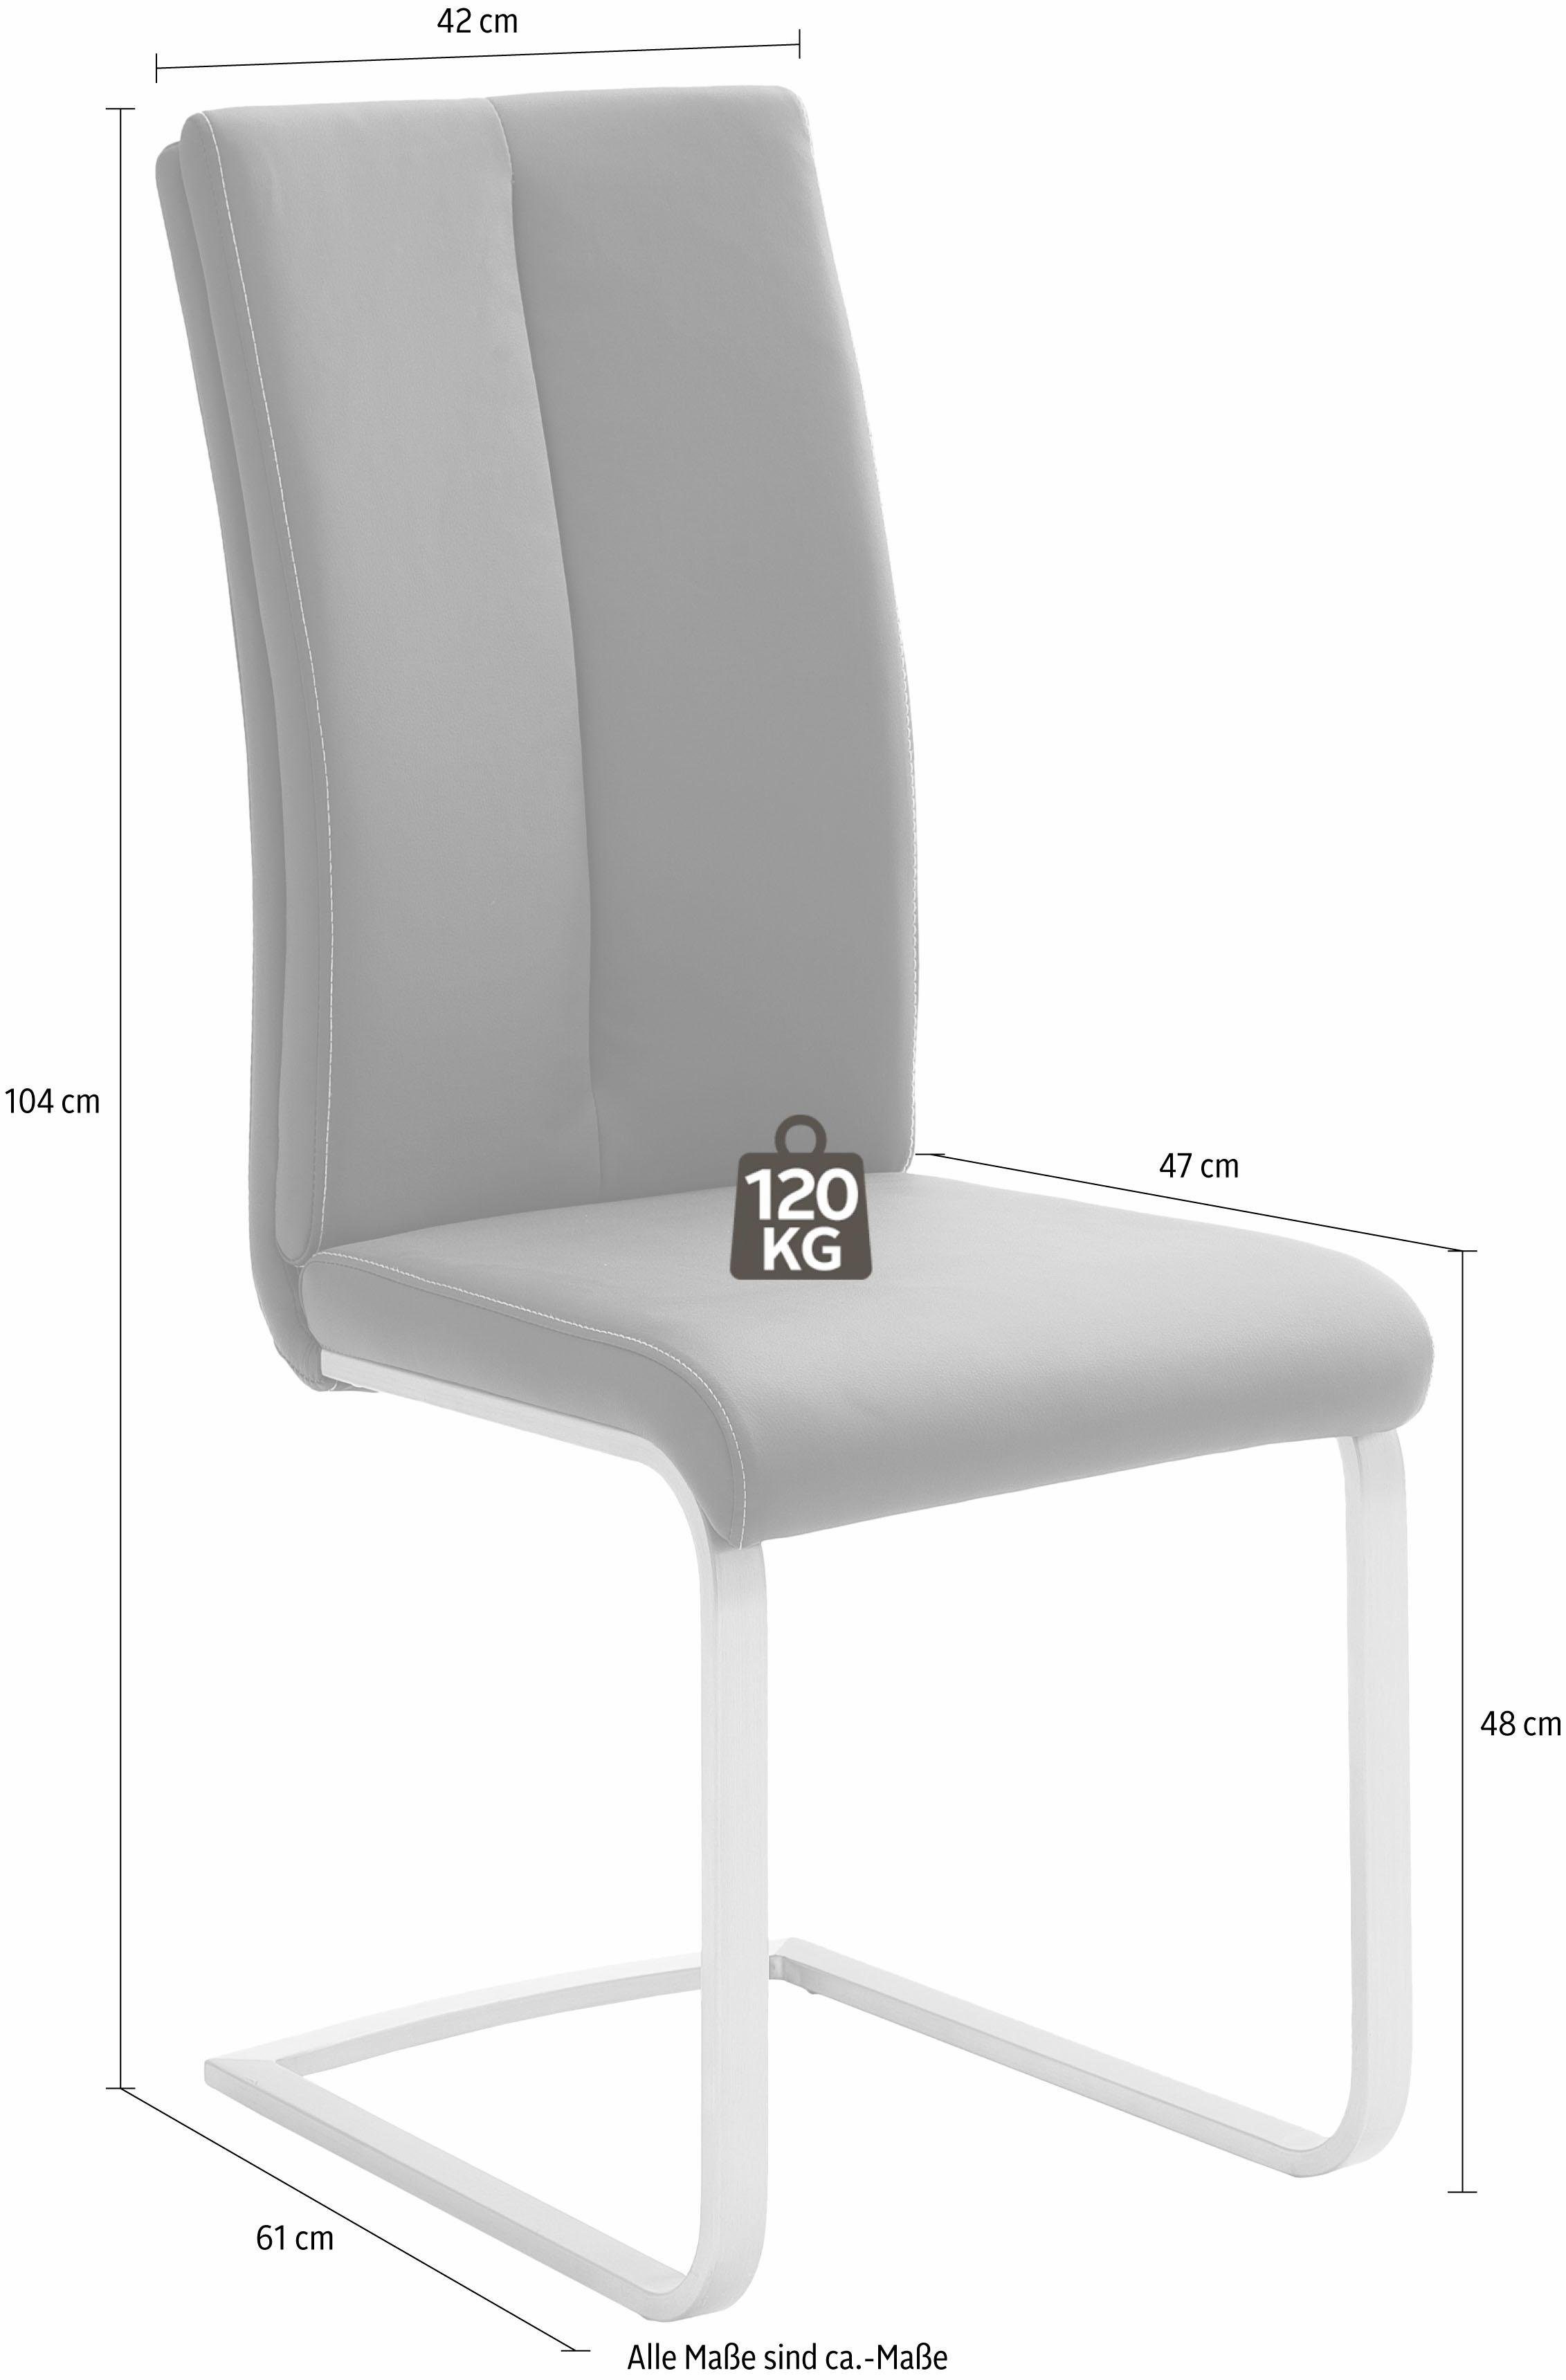 MCA furniture 120 2 kg 4 bis Stuhl (Set, belastbar | Cappuccino Cappuccino Freischwinger St), Paulo